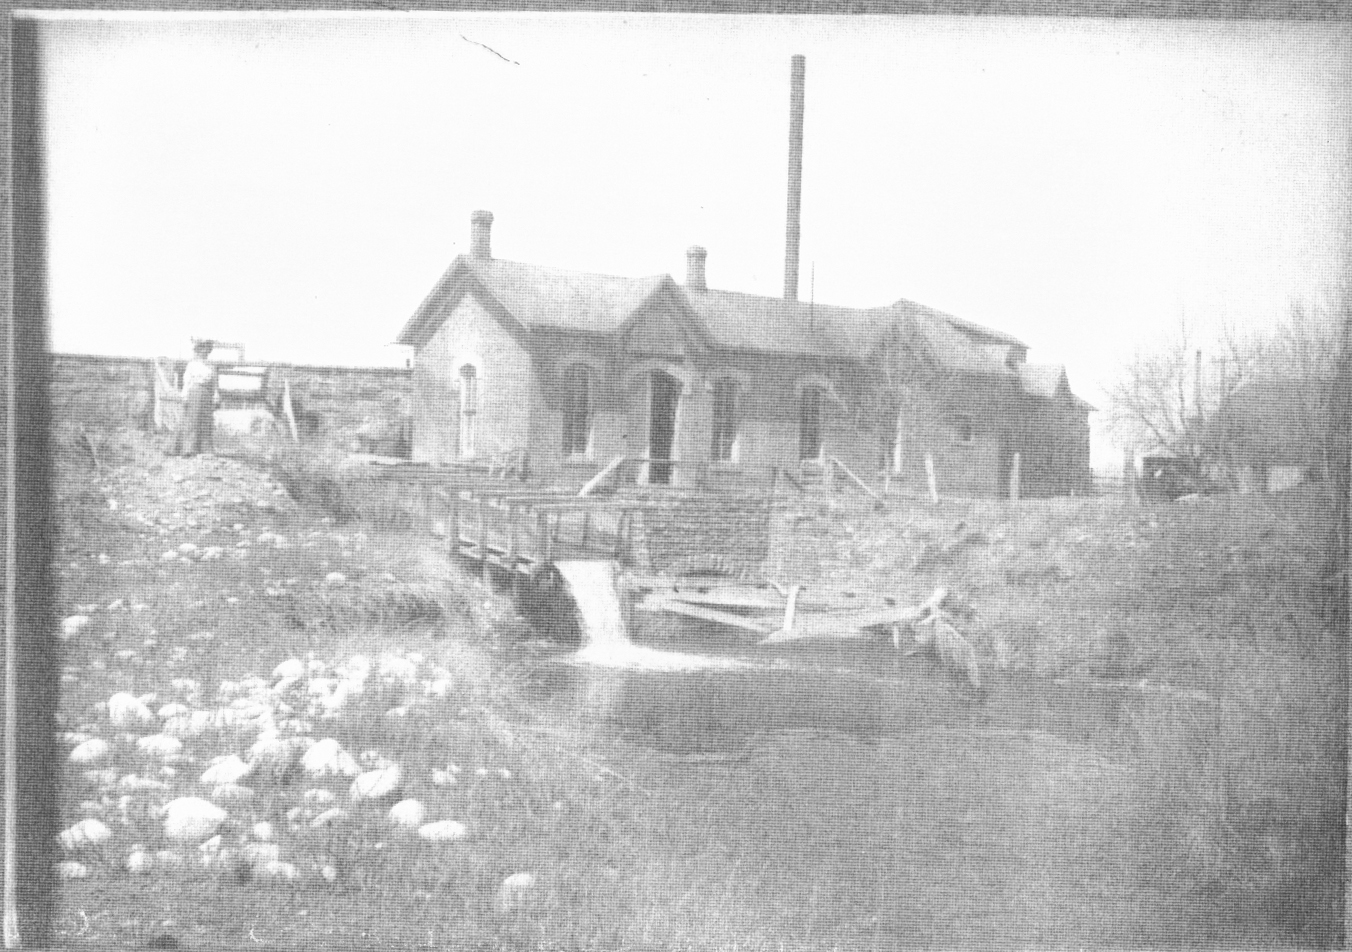  1883 Water Works ca. 1903 